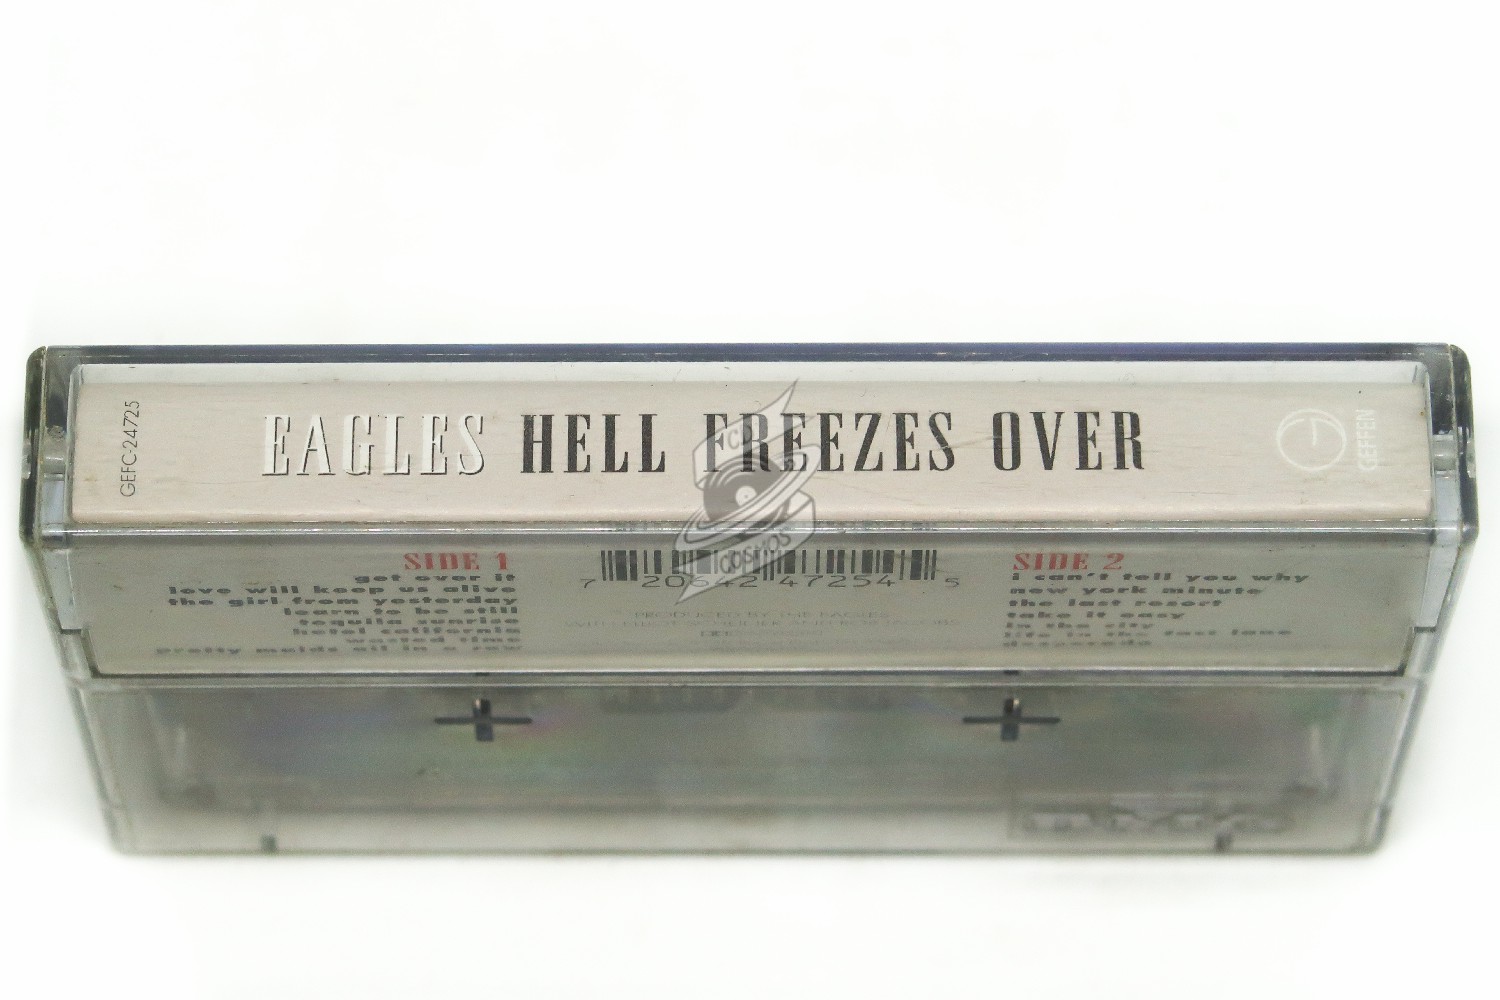 Eagles - Hell Freezes Over Cassette Tape